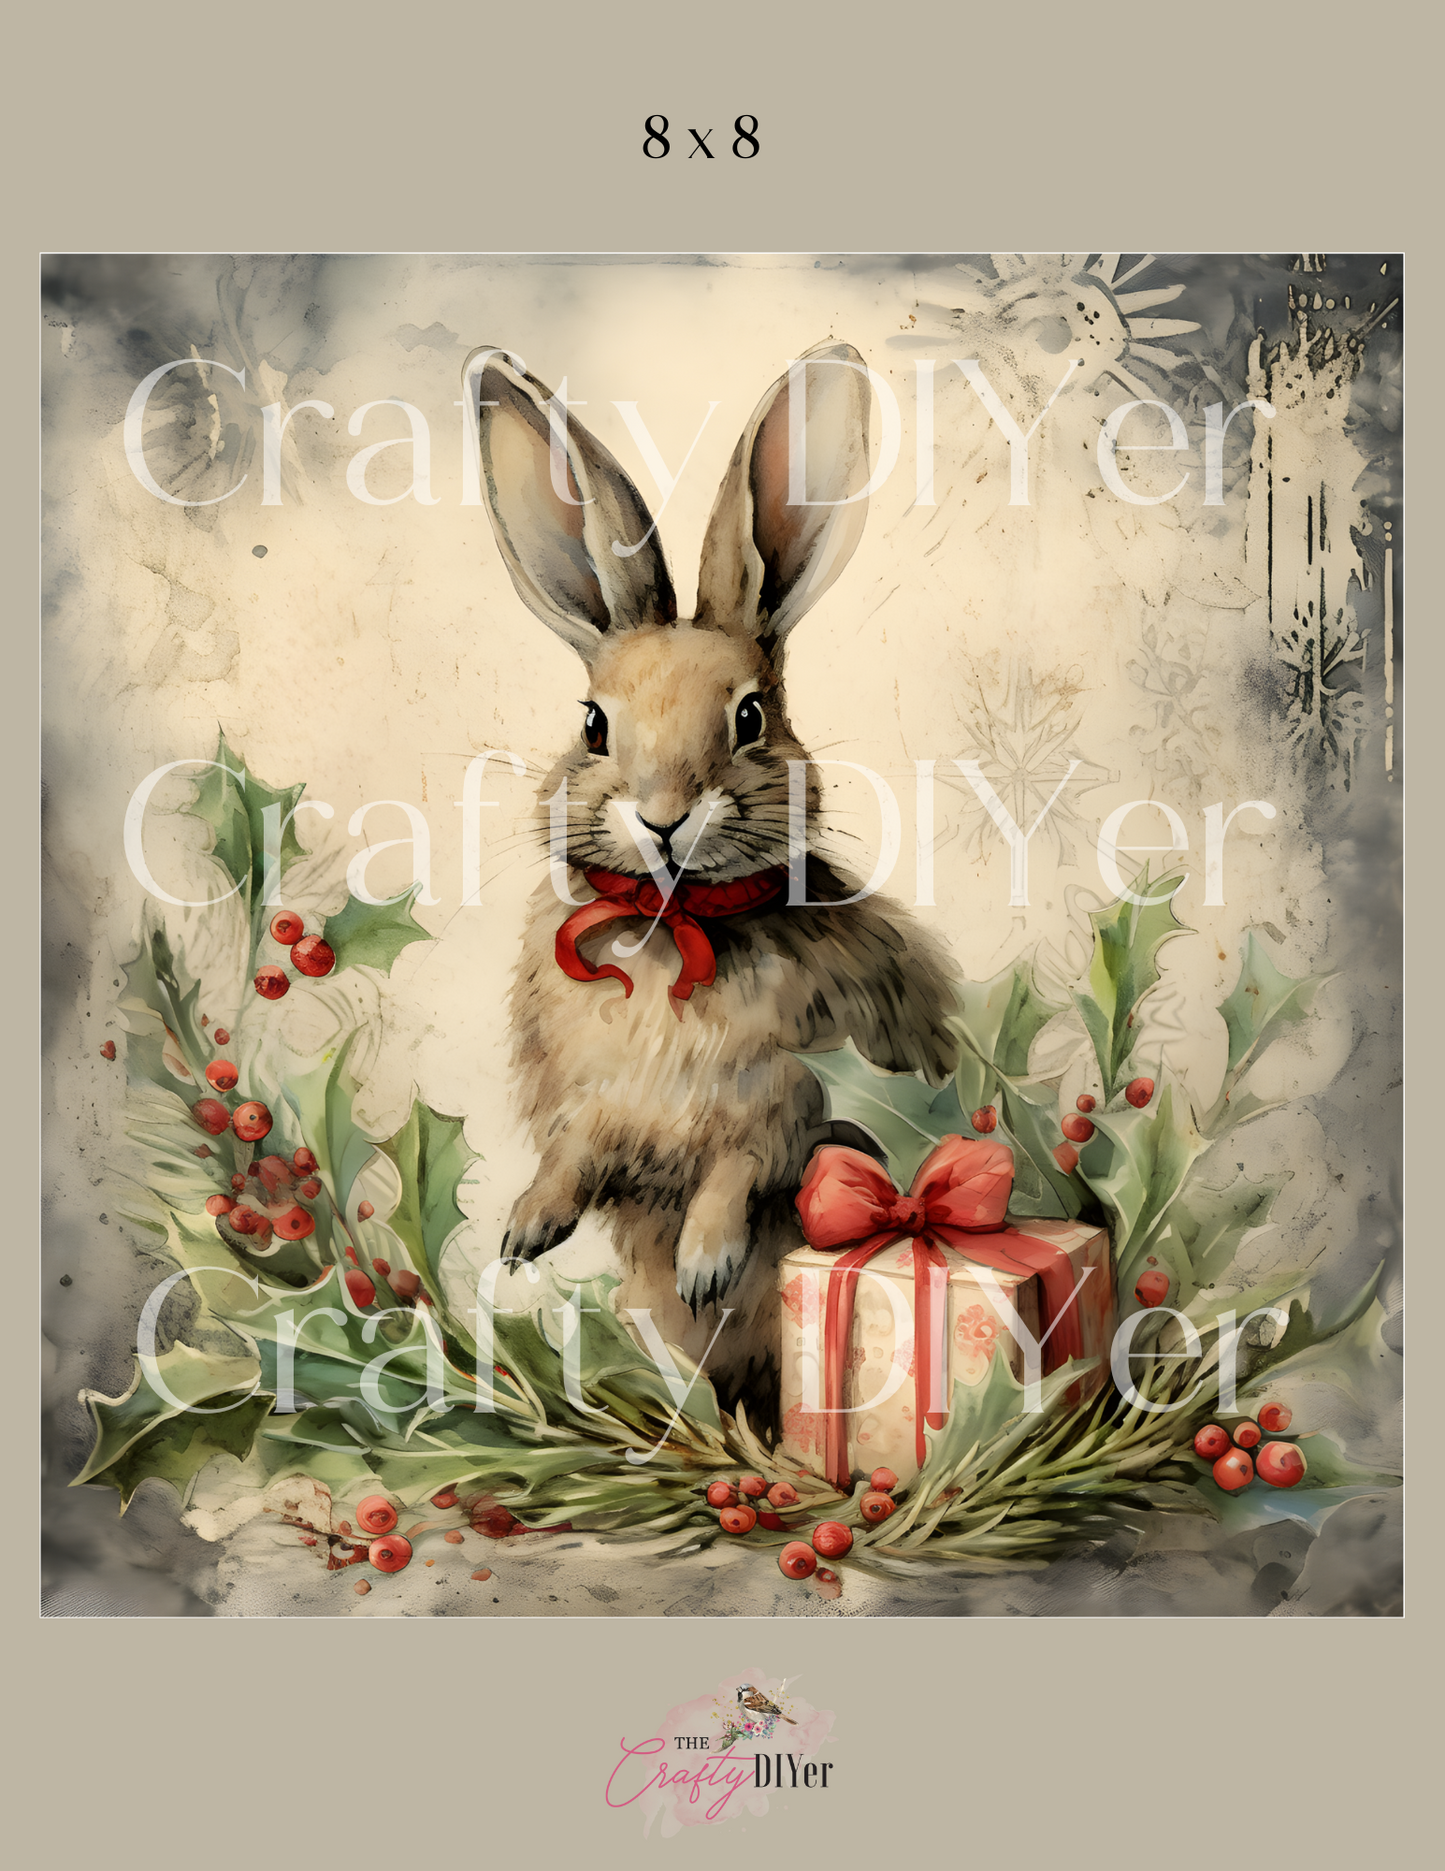 Holiday Hare Digital Print